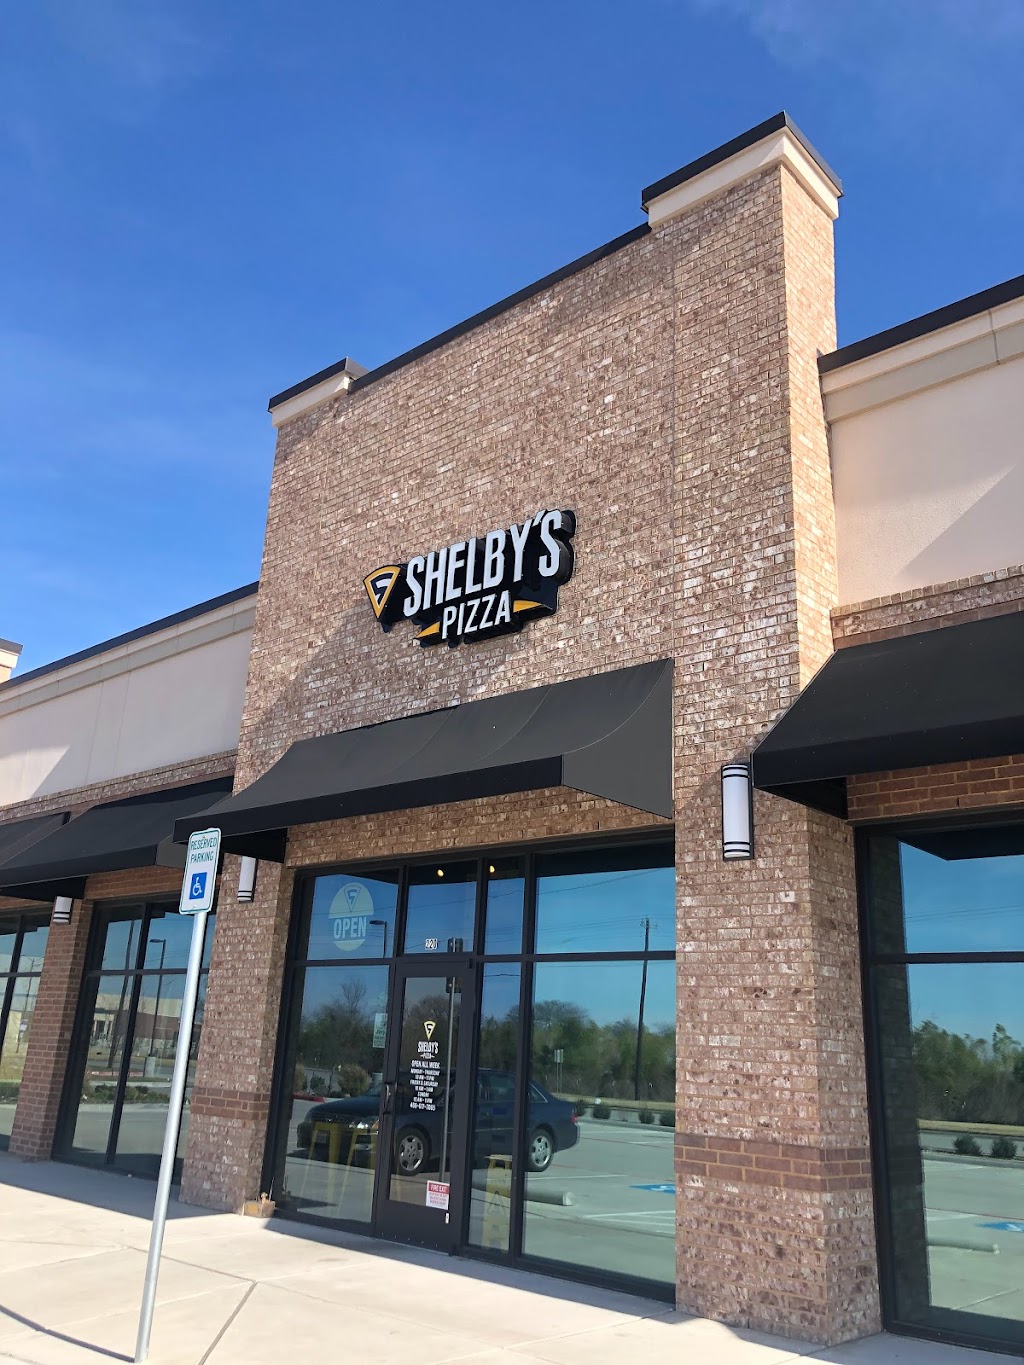 Shelbys Pizza | 210 Coit Rd Suite 220, McKinney, TX 75071, USA | Phone: (469) 617-7065